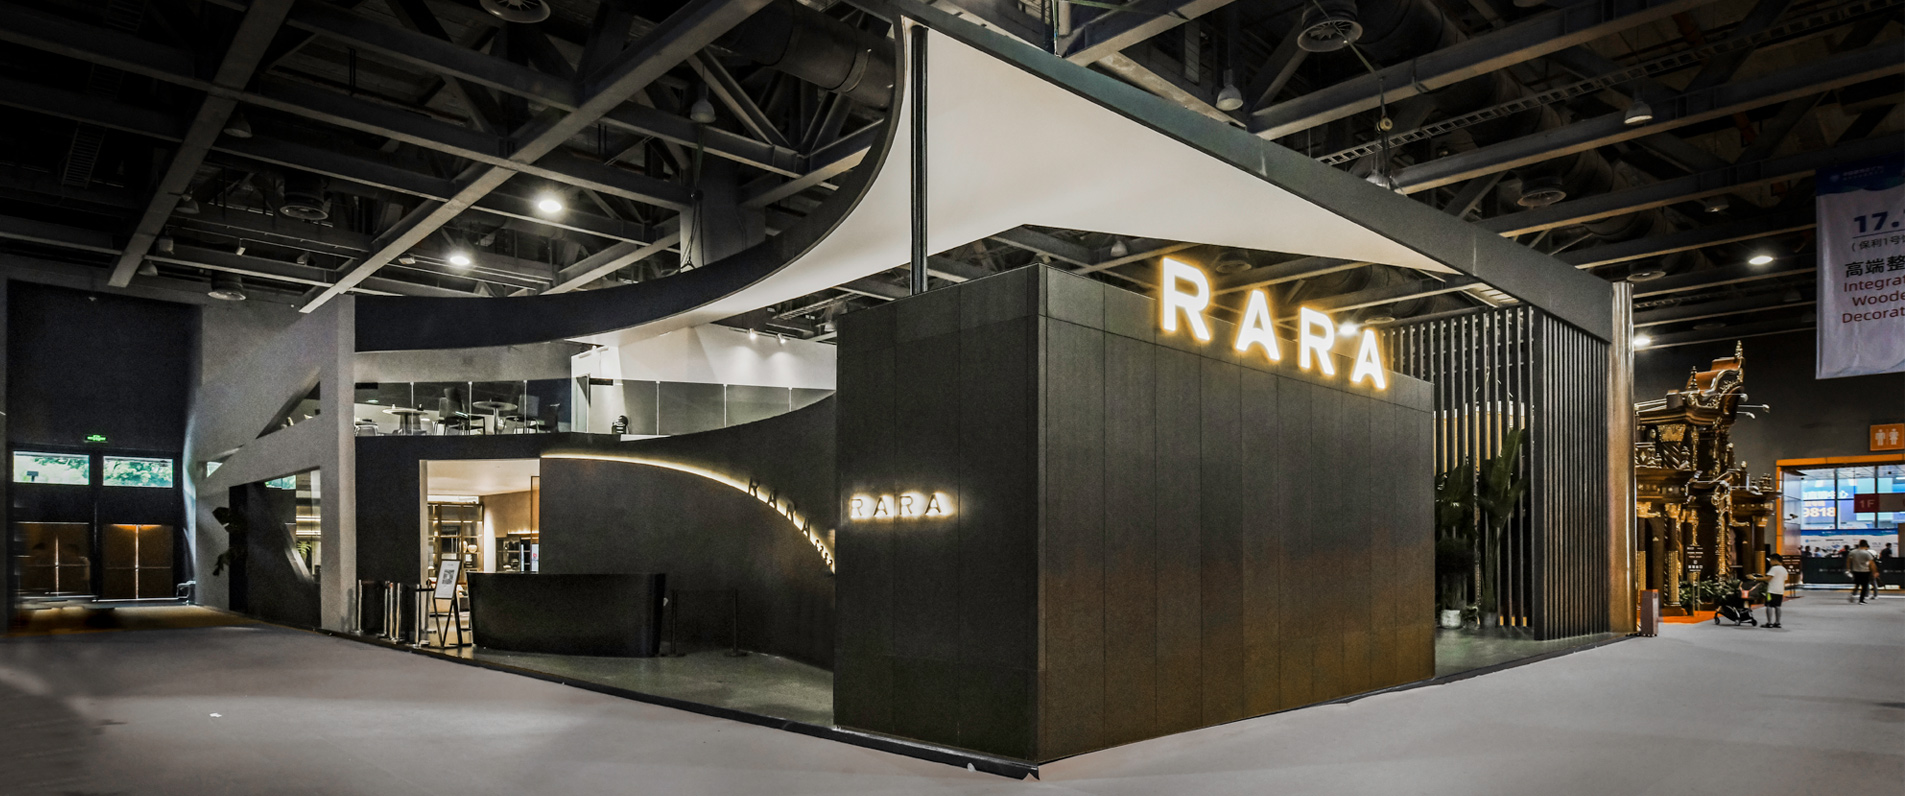 RARA CASA是源自意大利的系统定制家居品牌，在意大利、西班牙、奥地利等多个欧洲国家设有设计中心、研发单位和合作生产工厂。